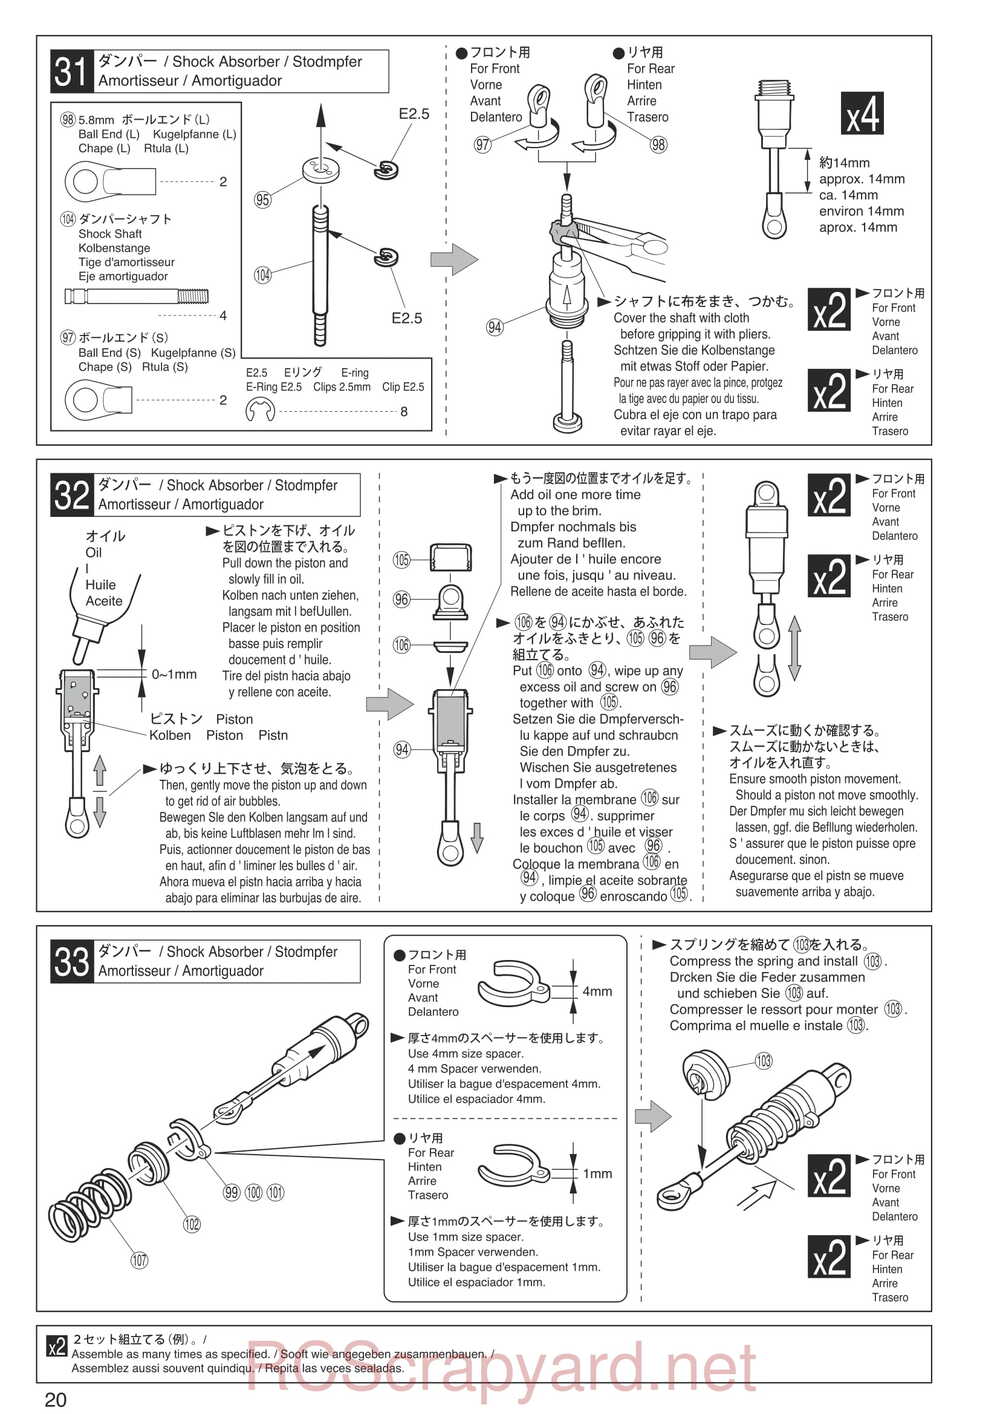 Kyosho - 30903 - EP FAZER - Manual - Page 20